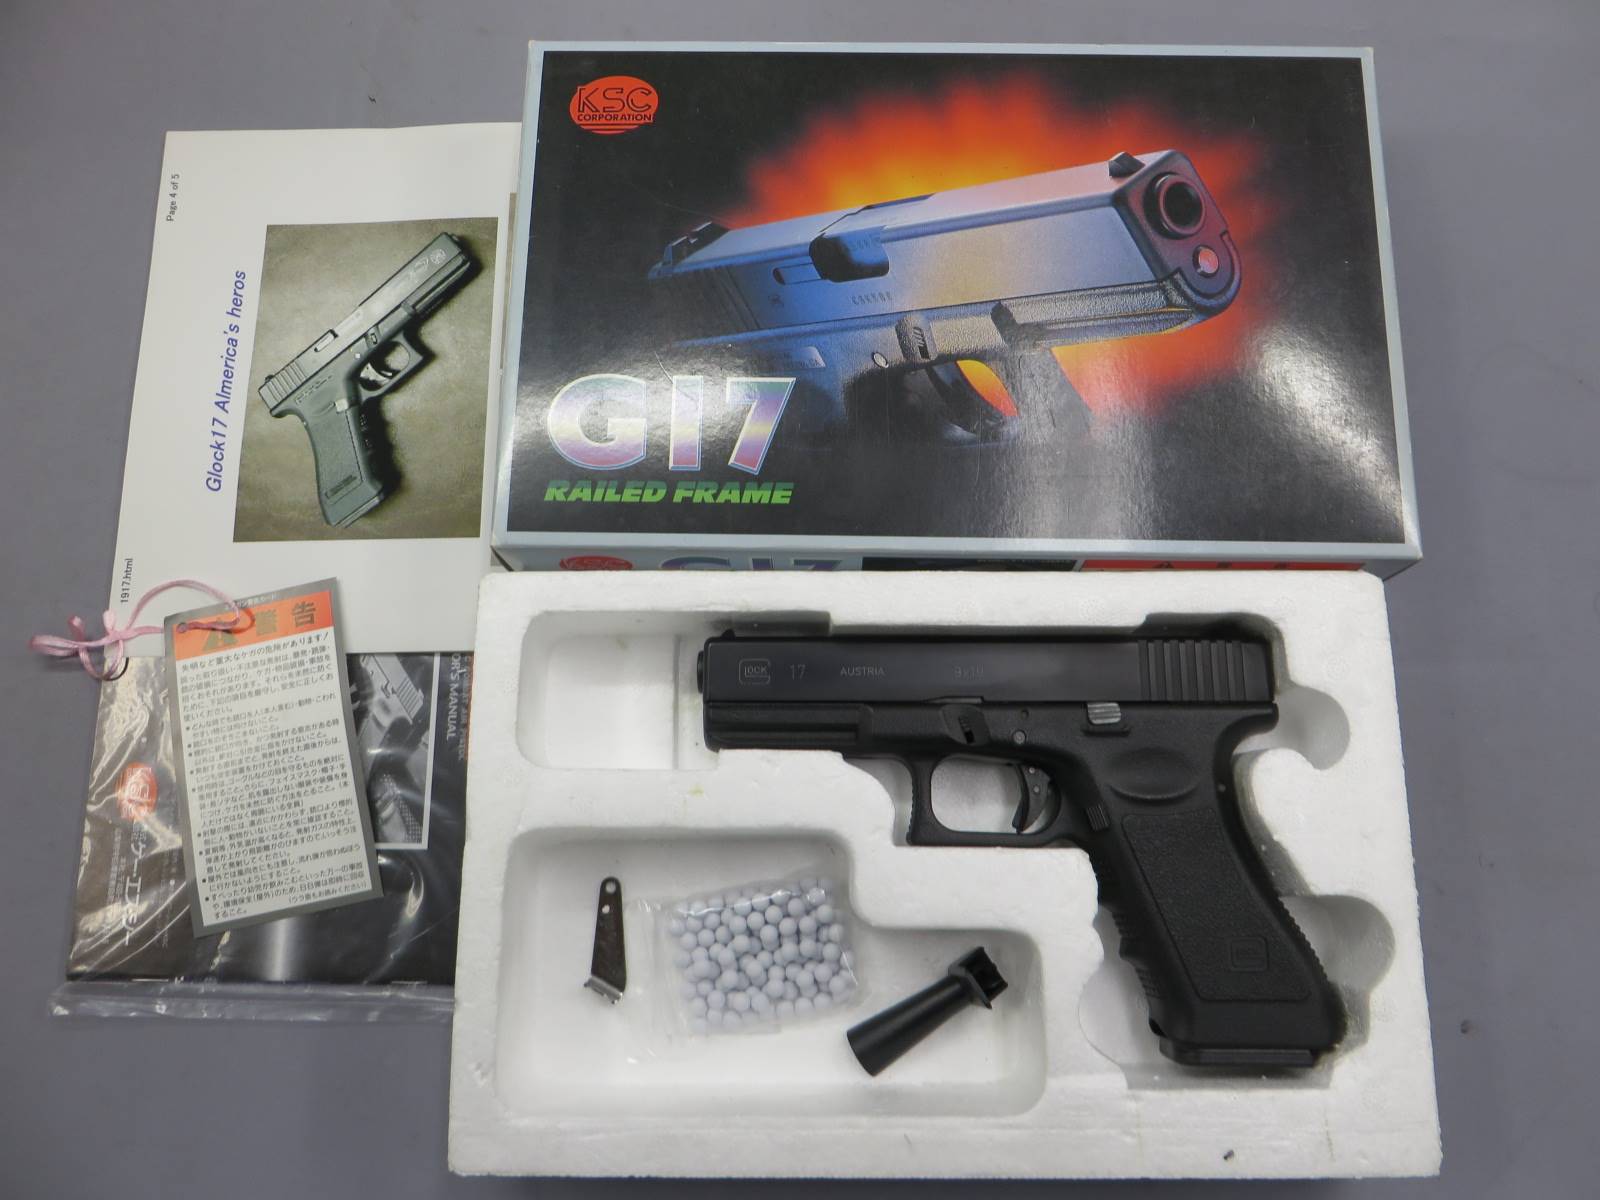 【KSC】グロック17 レイルドフレイム  ショップ刻印 ・G17 Glock17